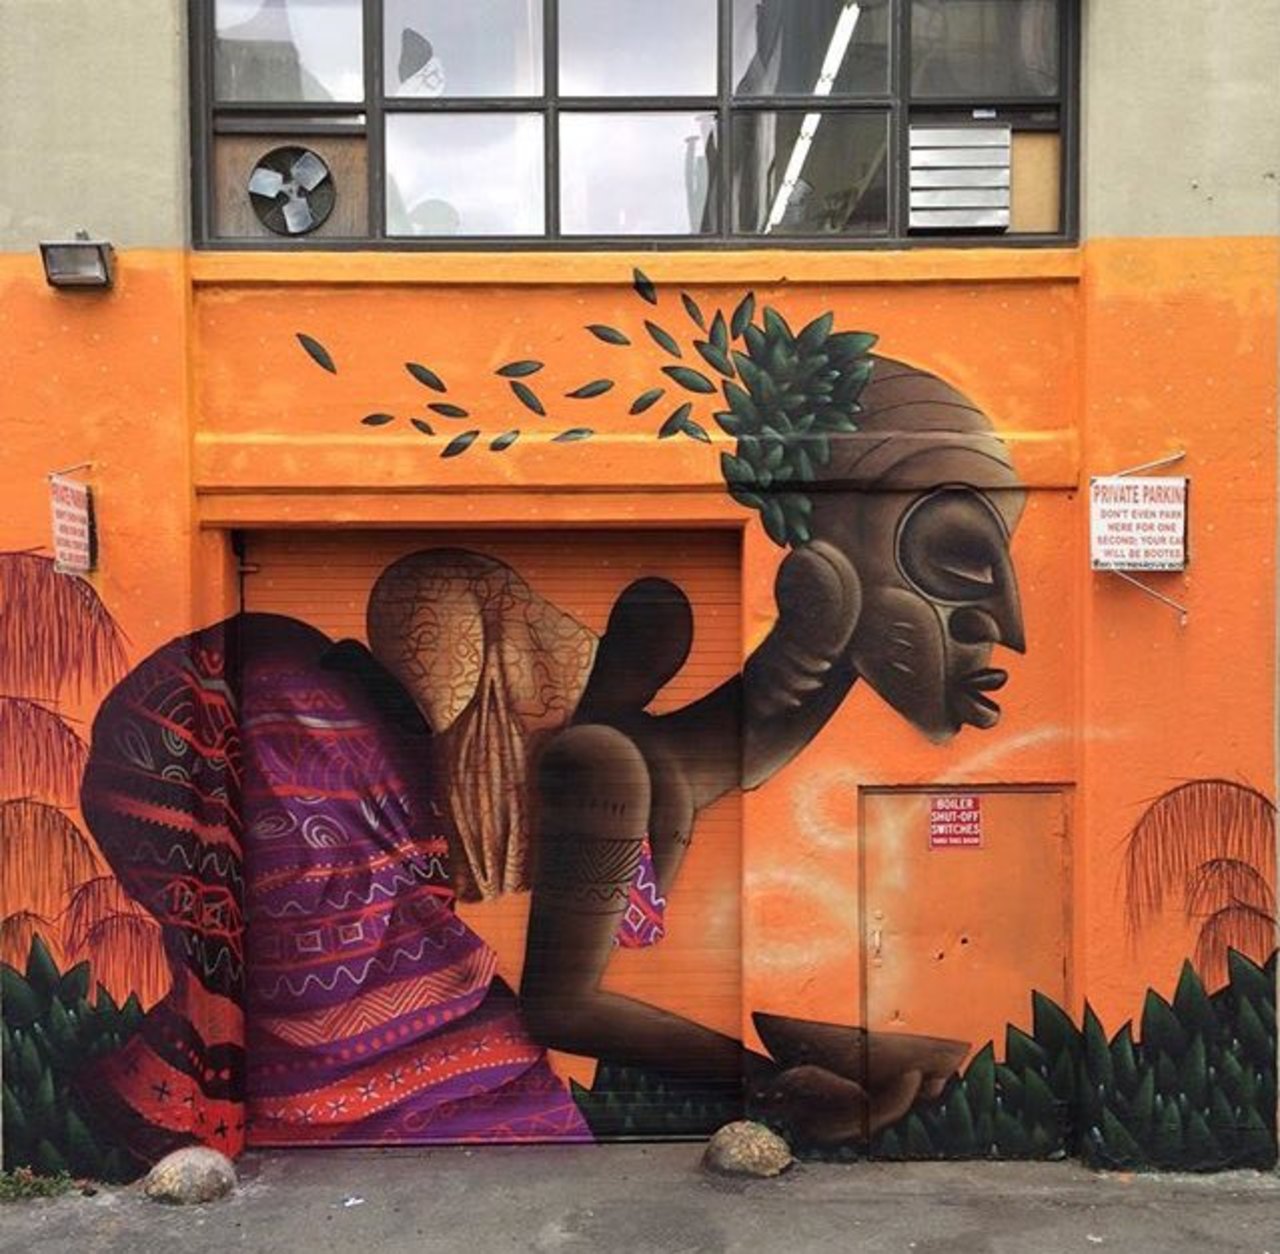 RT @GoogleStreetArt "New Street Art by Alexandre Keto in NYC 

#art #graffiti #mural #streetart https://t.co/bE3jw7bsUU"